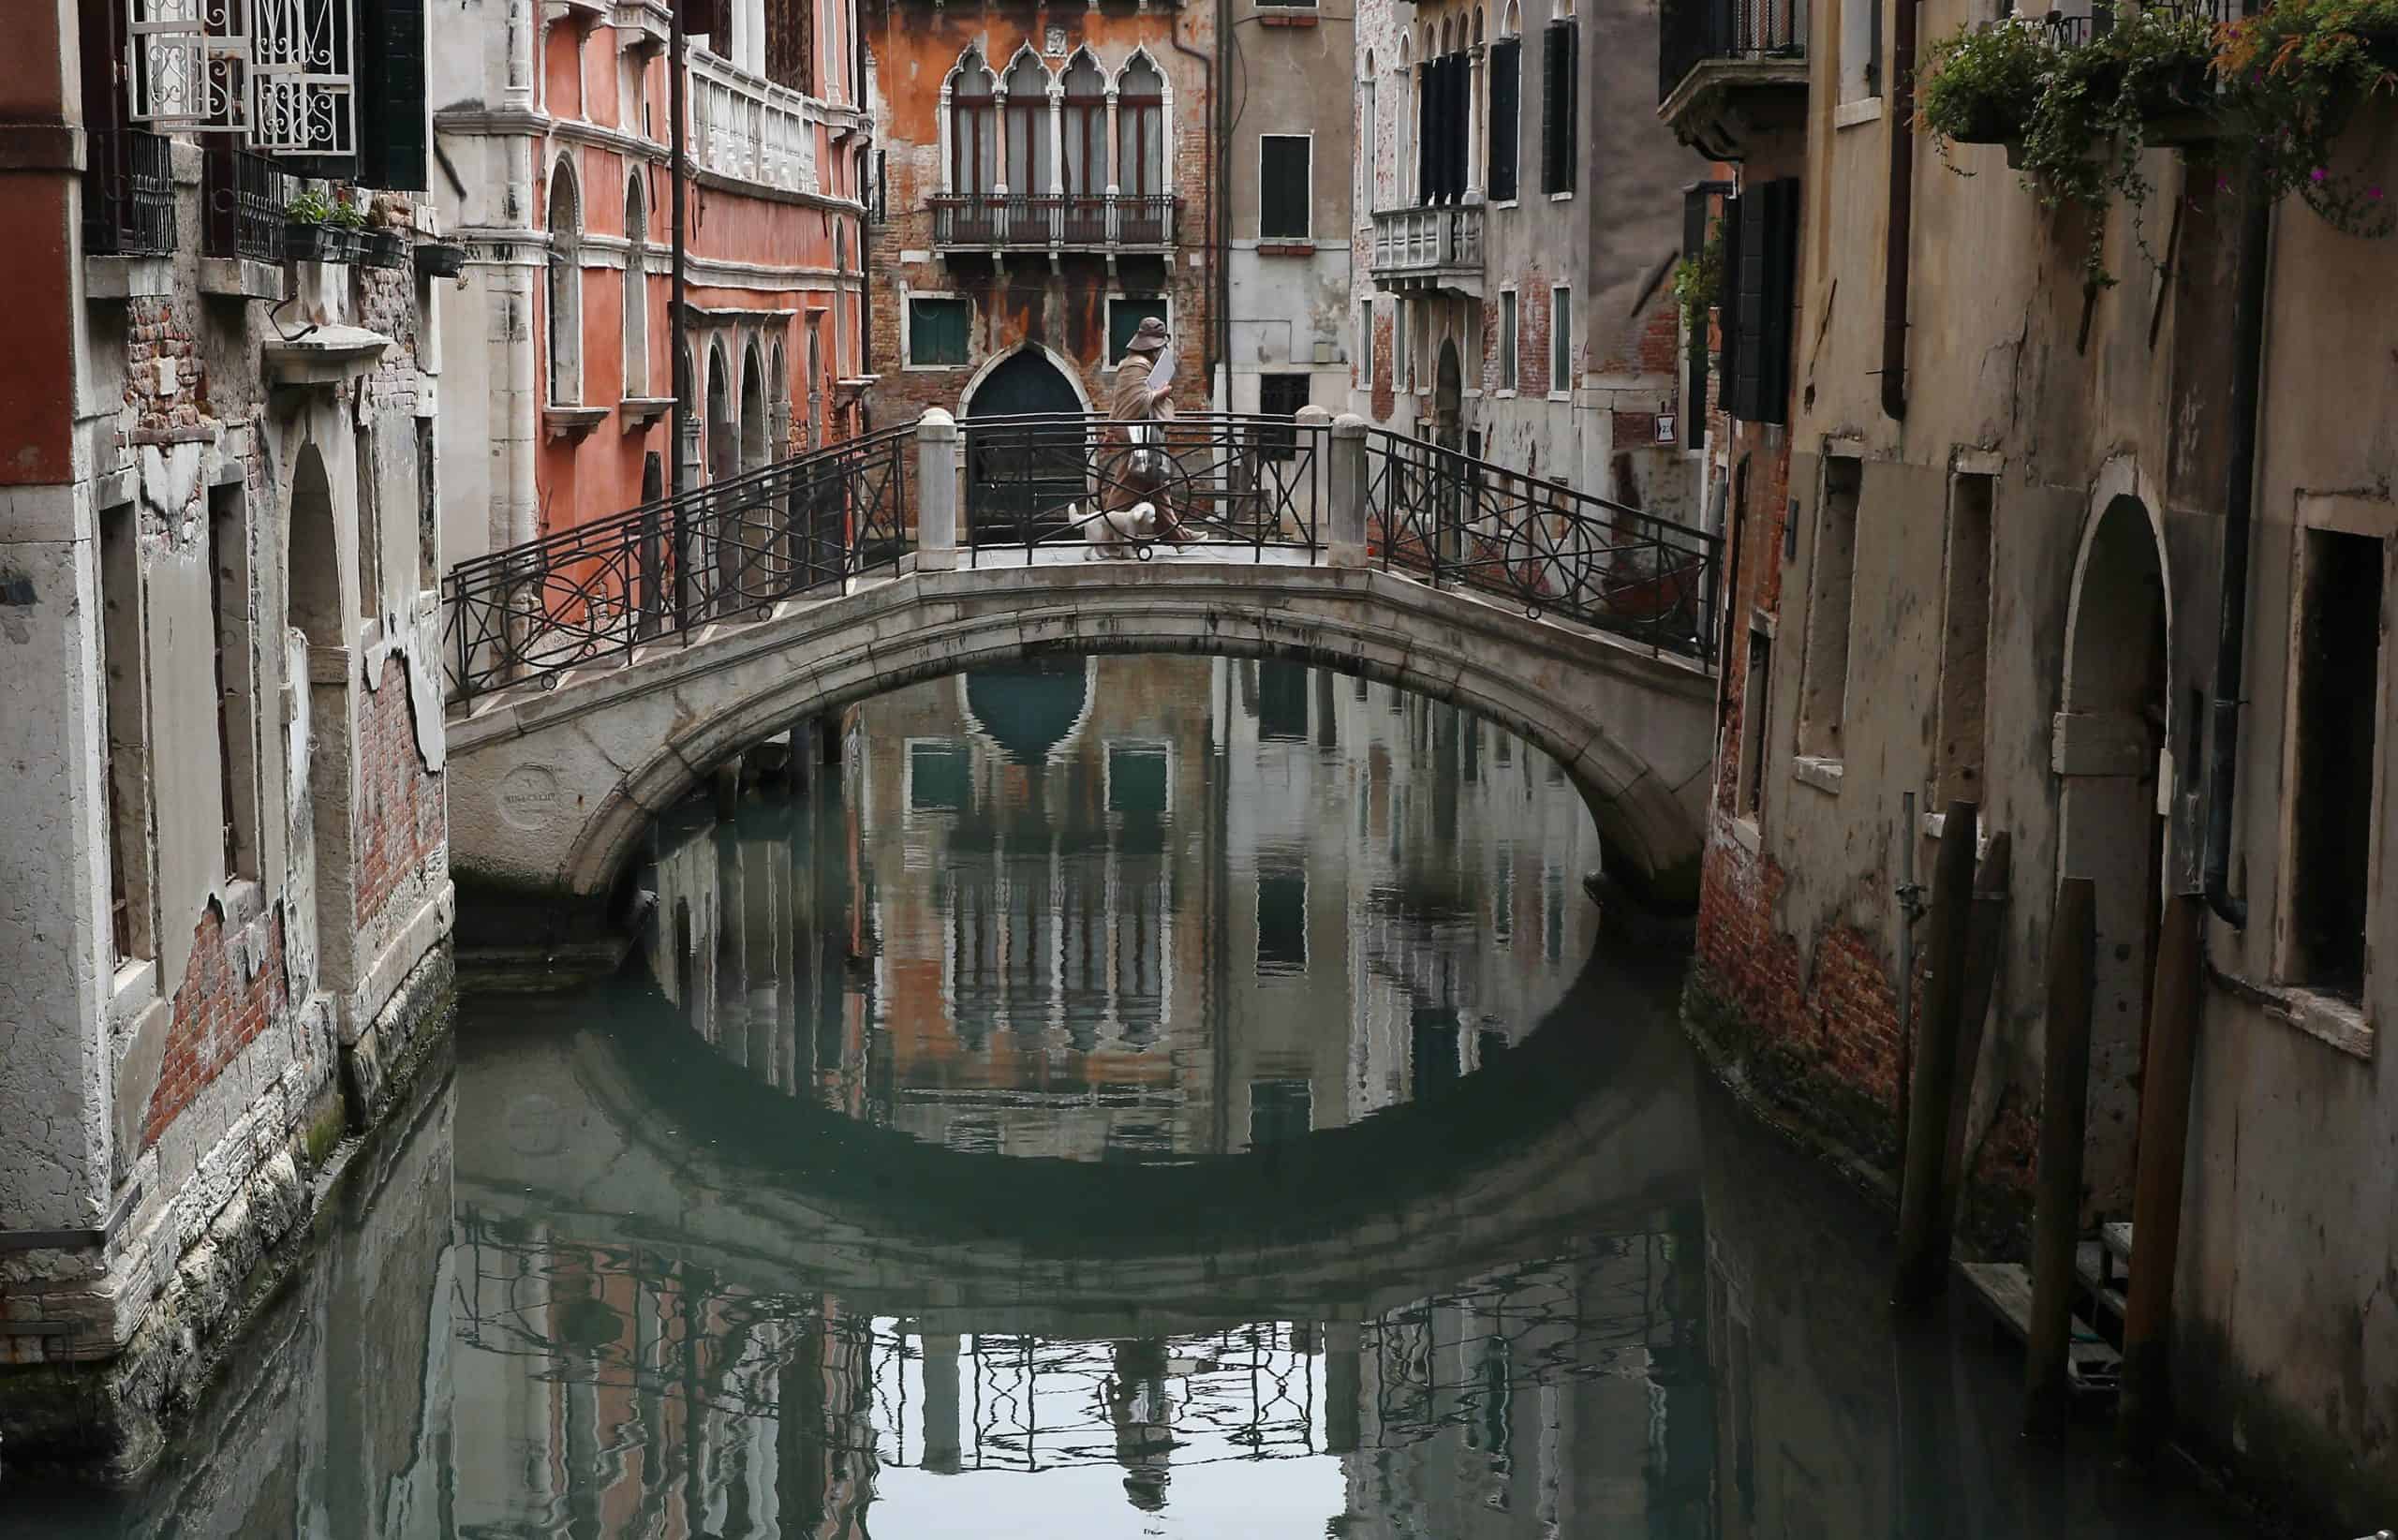 Venice views lockdown as chance to reimagine future